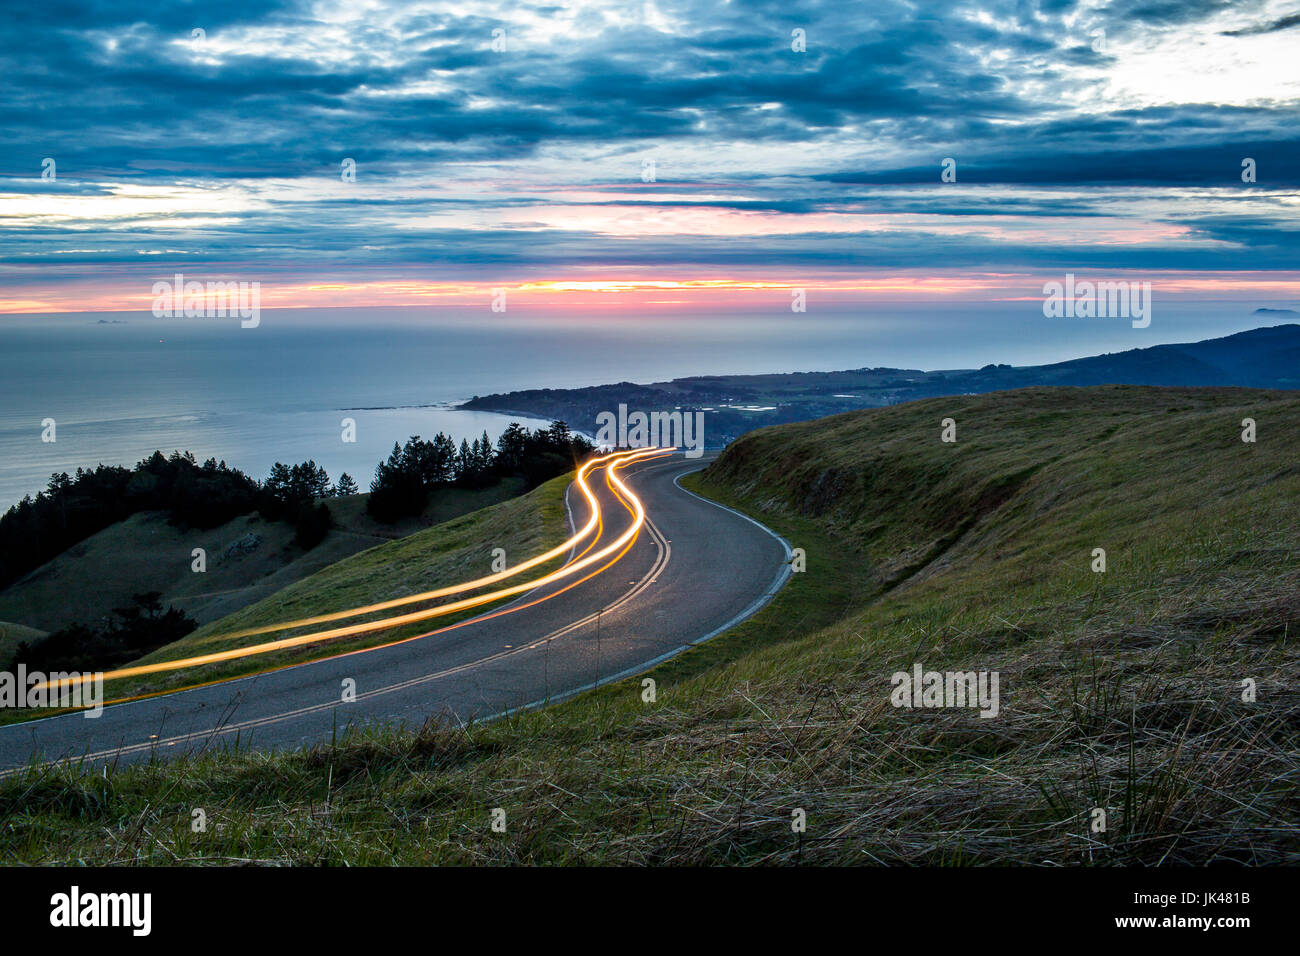 Light trails on winding road near ocean Stock Photo